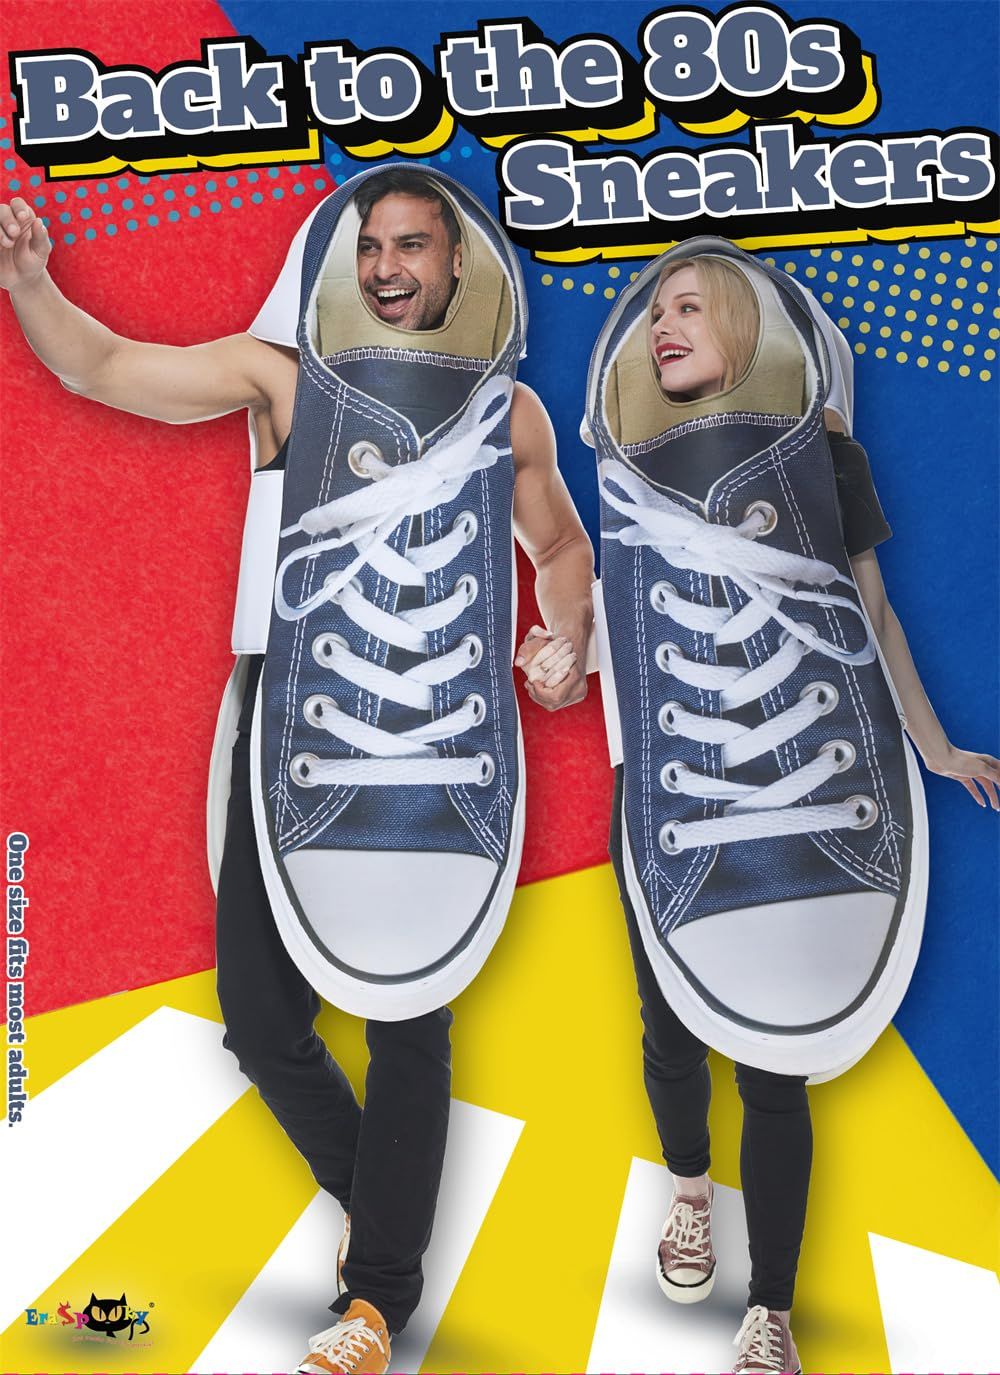 EraSpooky Sneaker-Kostüm für Erwachsene, lustige Halloween-Paar-Schuh-Outfits